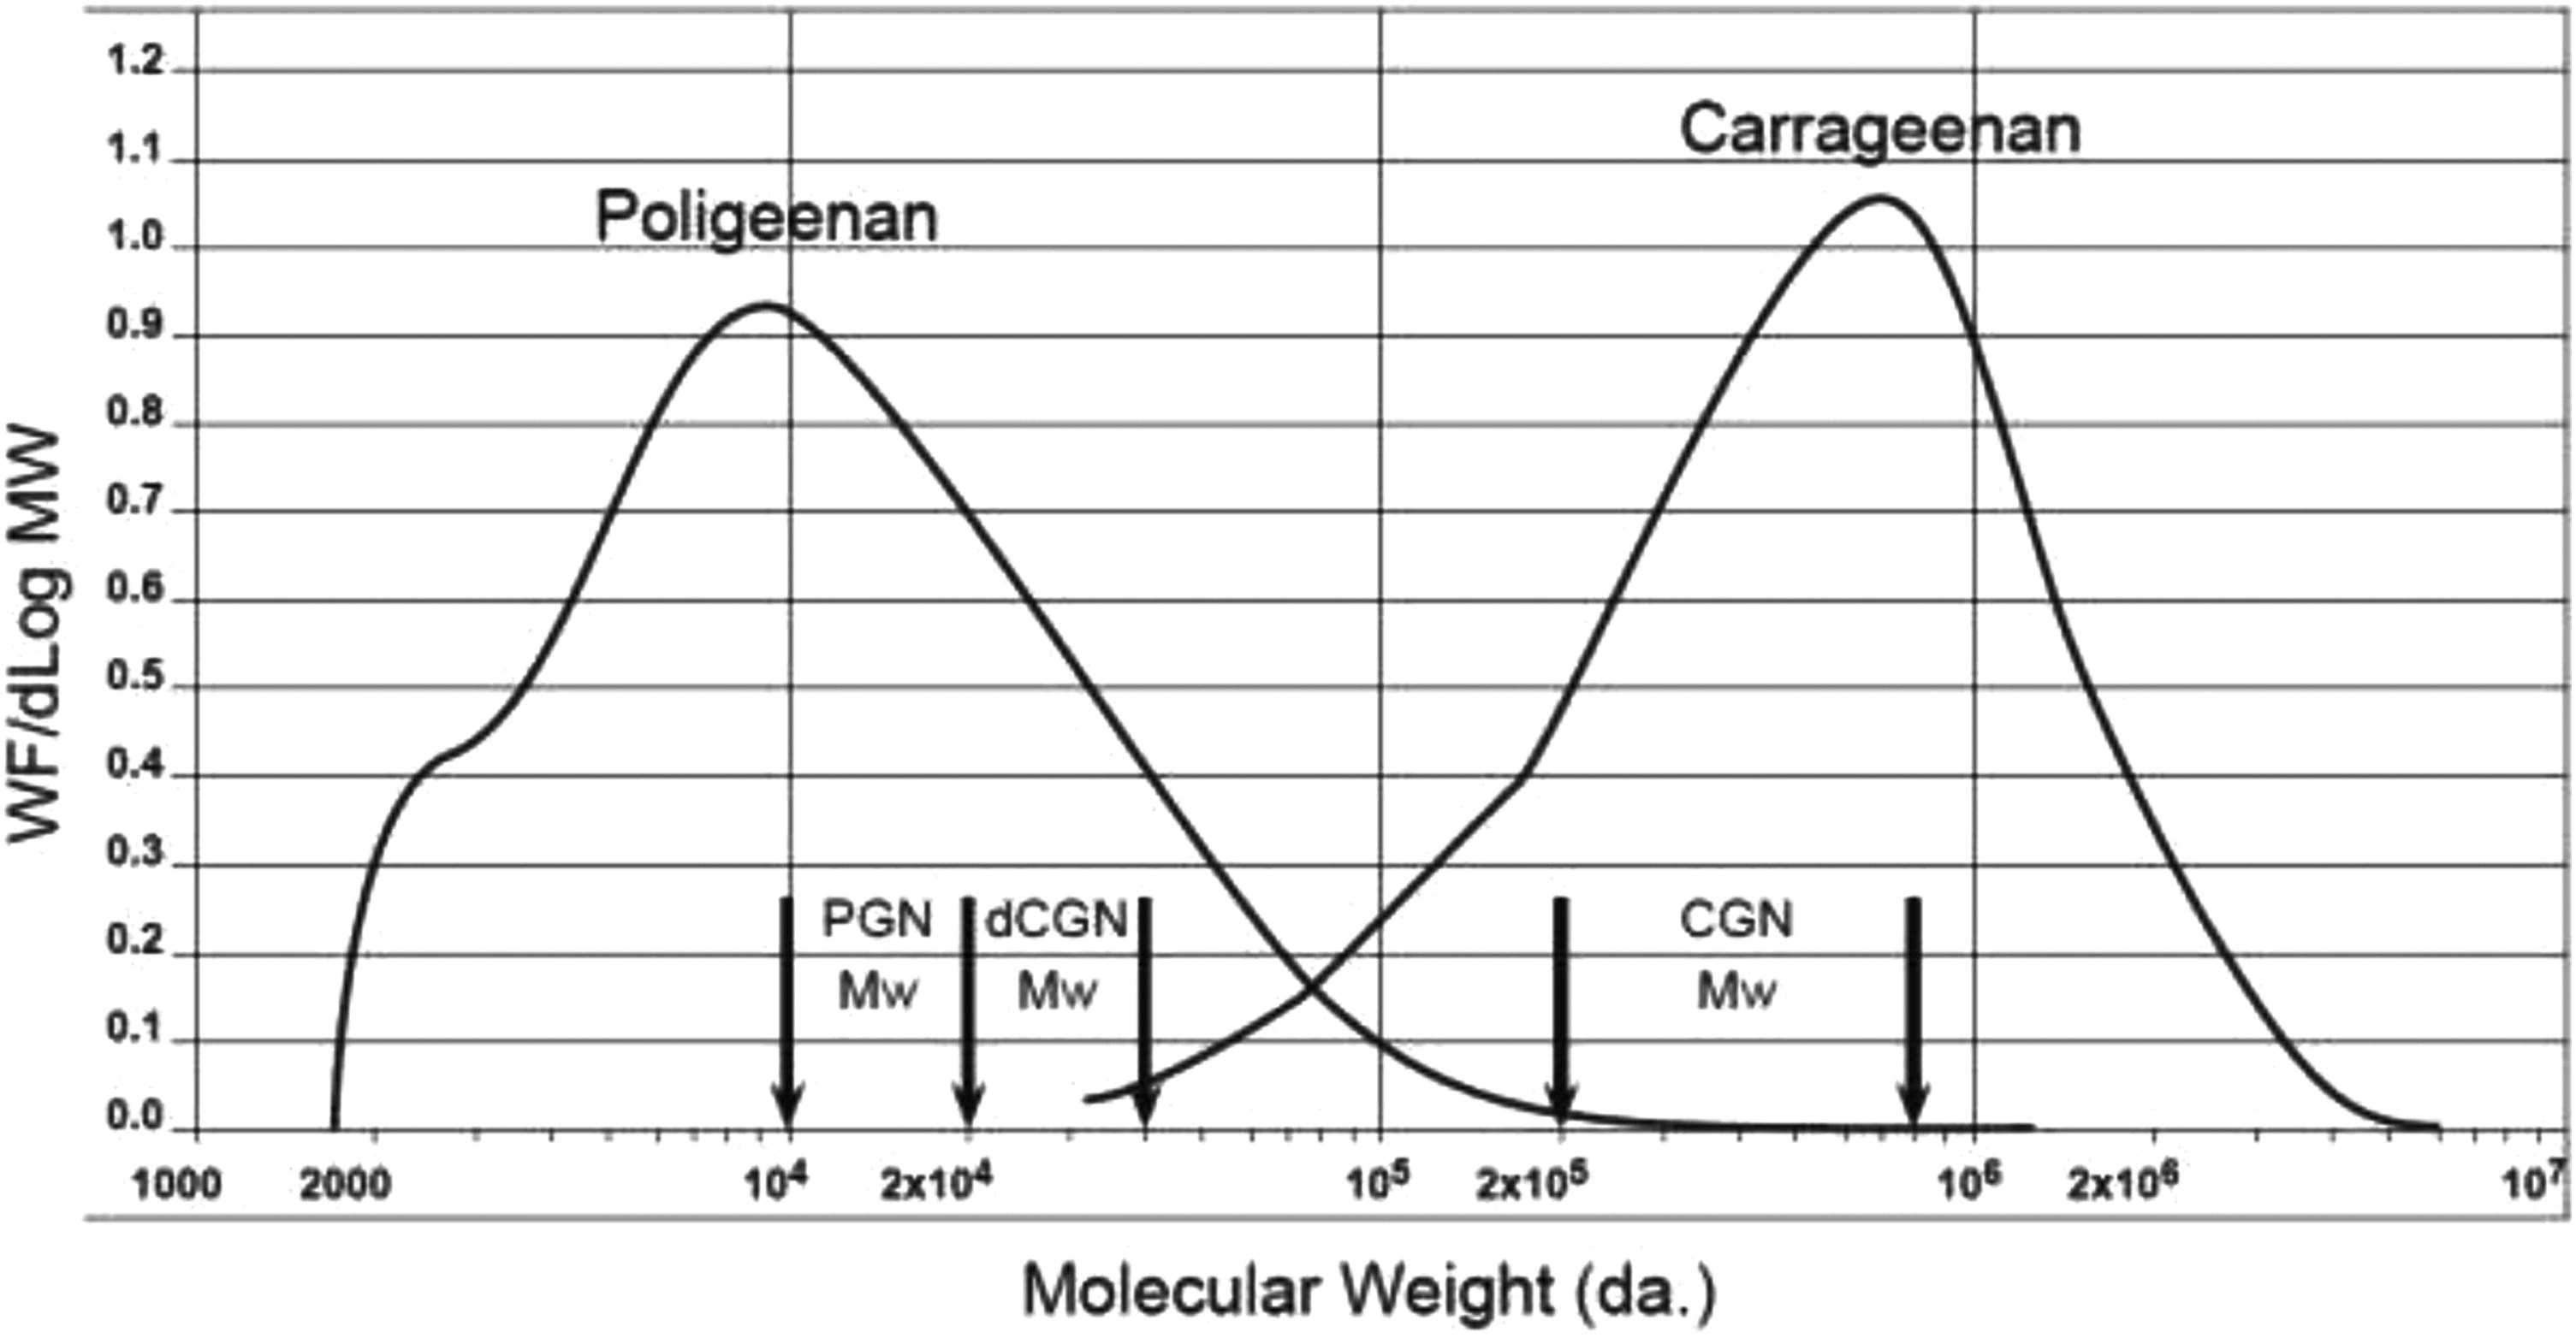 Molecular weight profiles of poligeenan and carrageenan